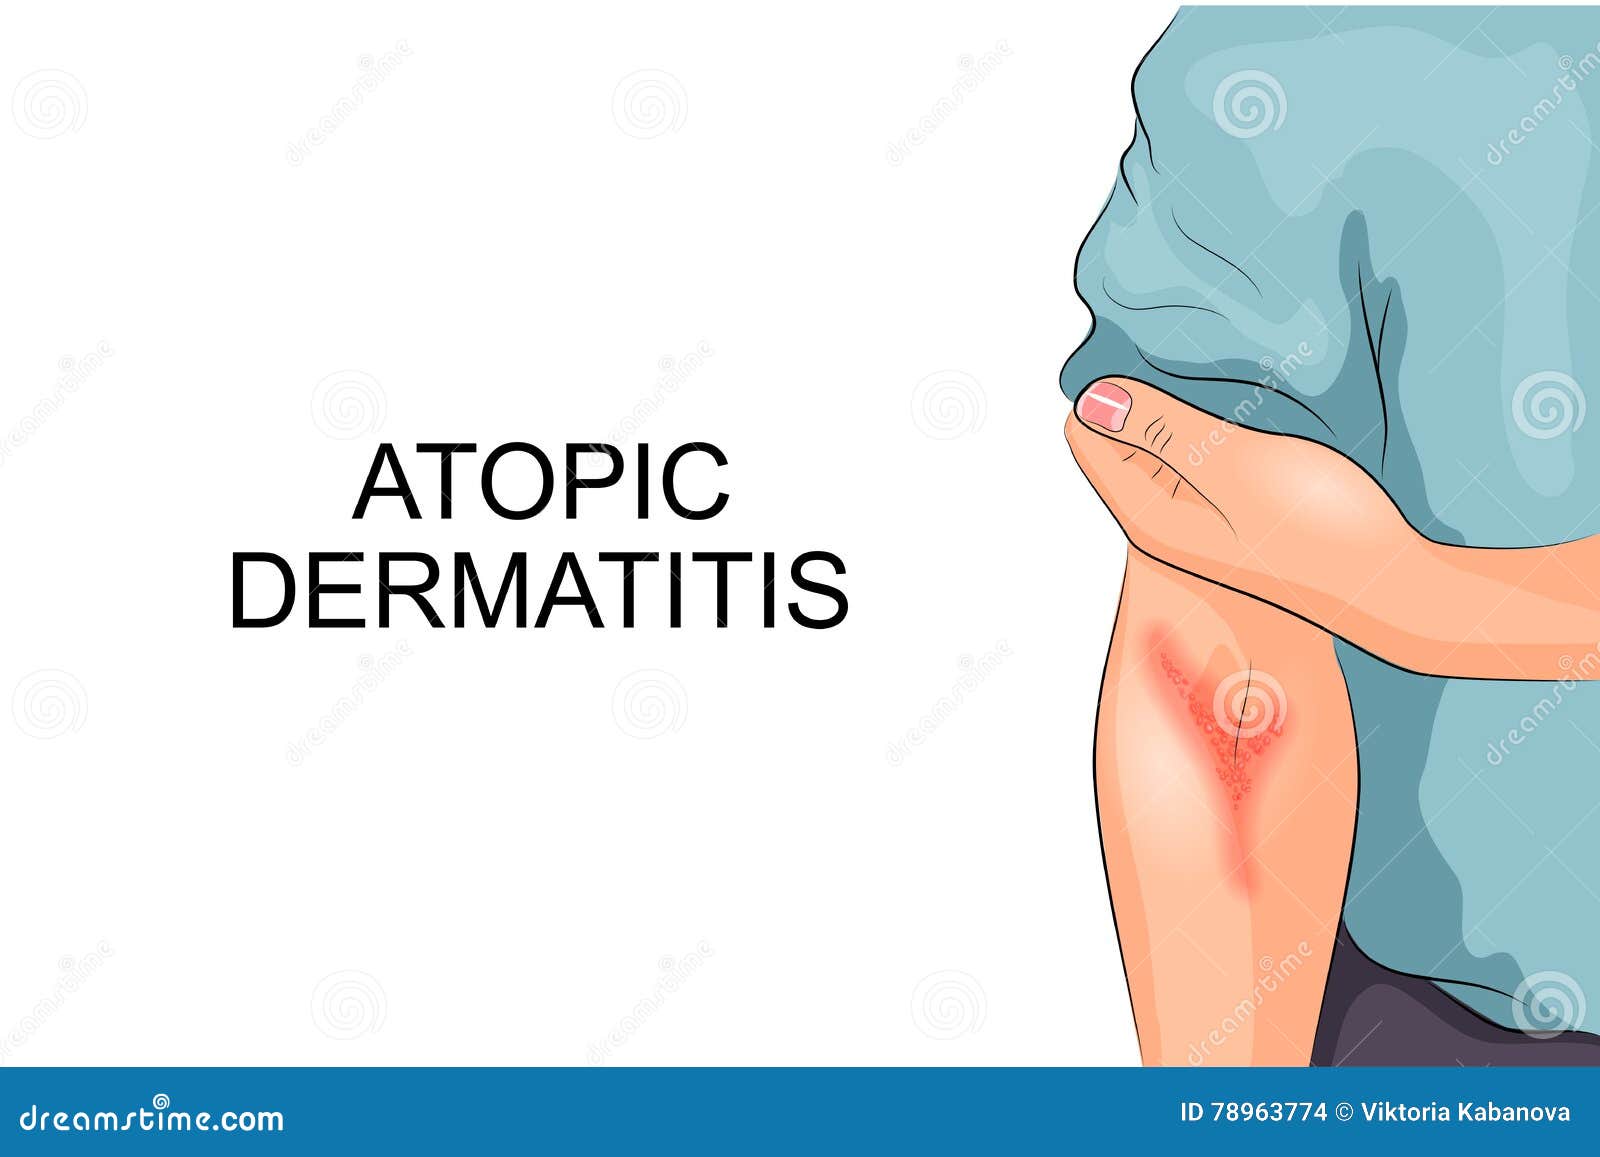 atopic dermatitis. allergy